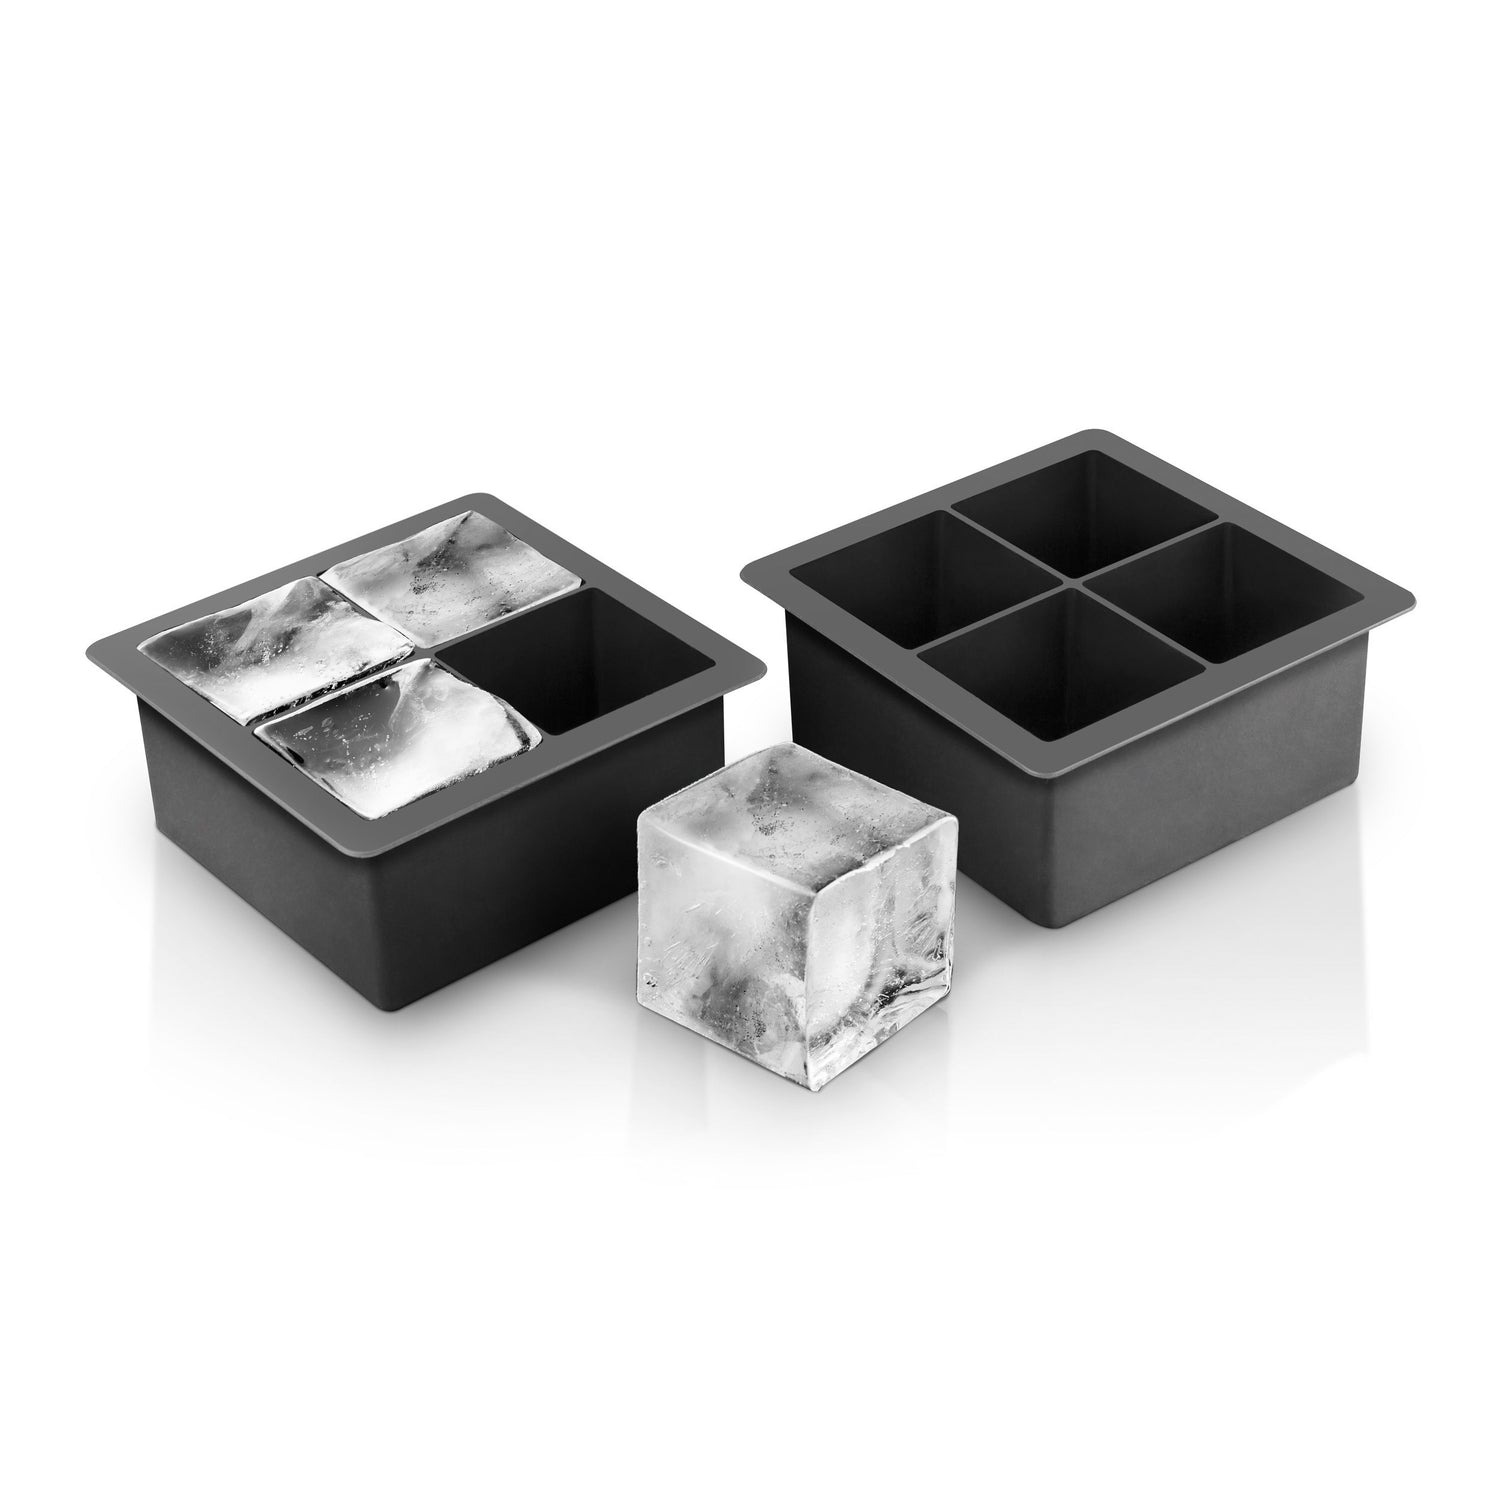 2" Extra-Large 4 Cube Ice Mould - Set of 2